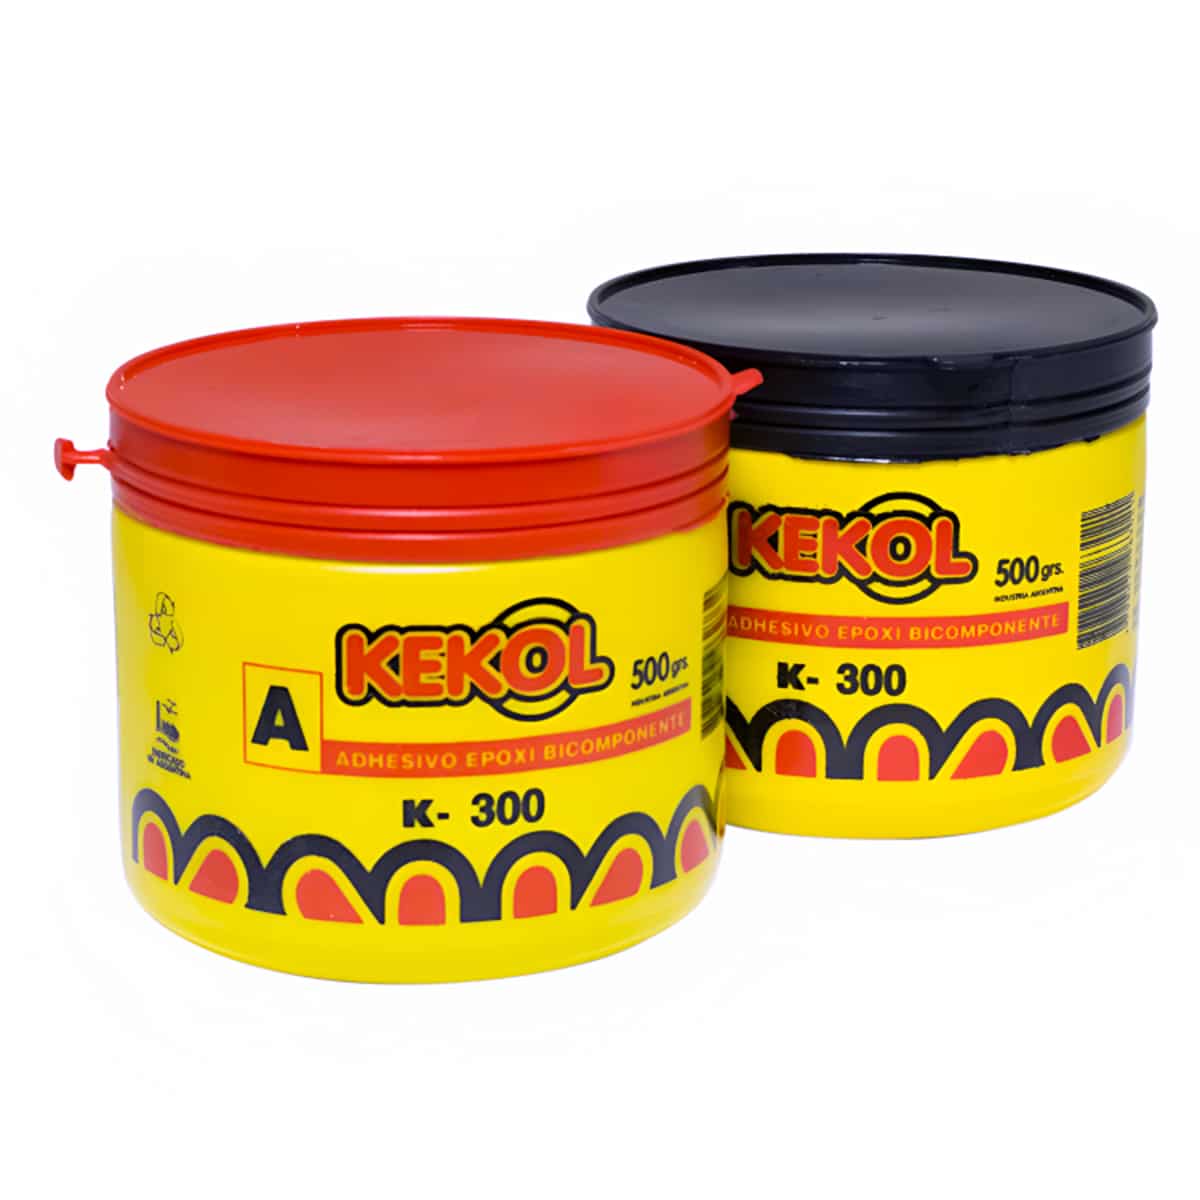 Adhesivo Epoxi Bicomponente Kekol Pote 1 kg - Guala Soluciones